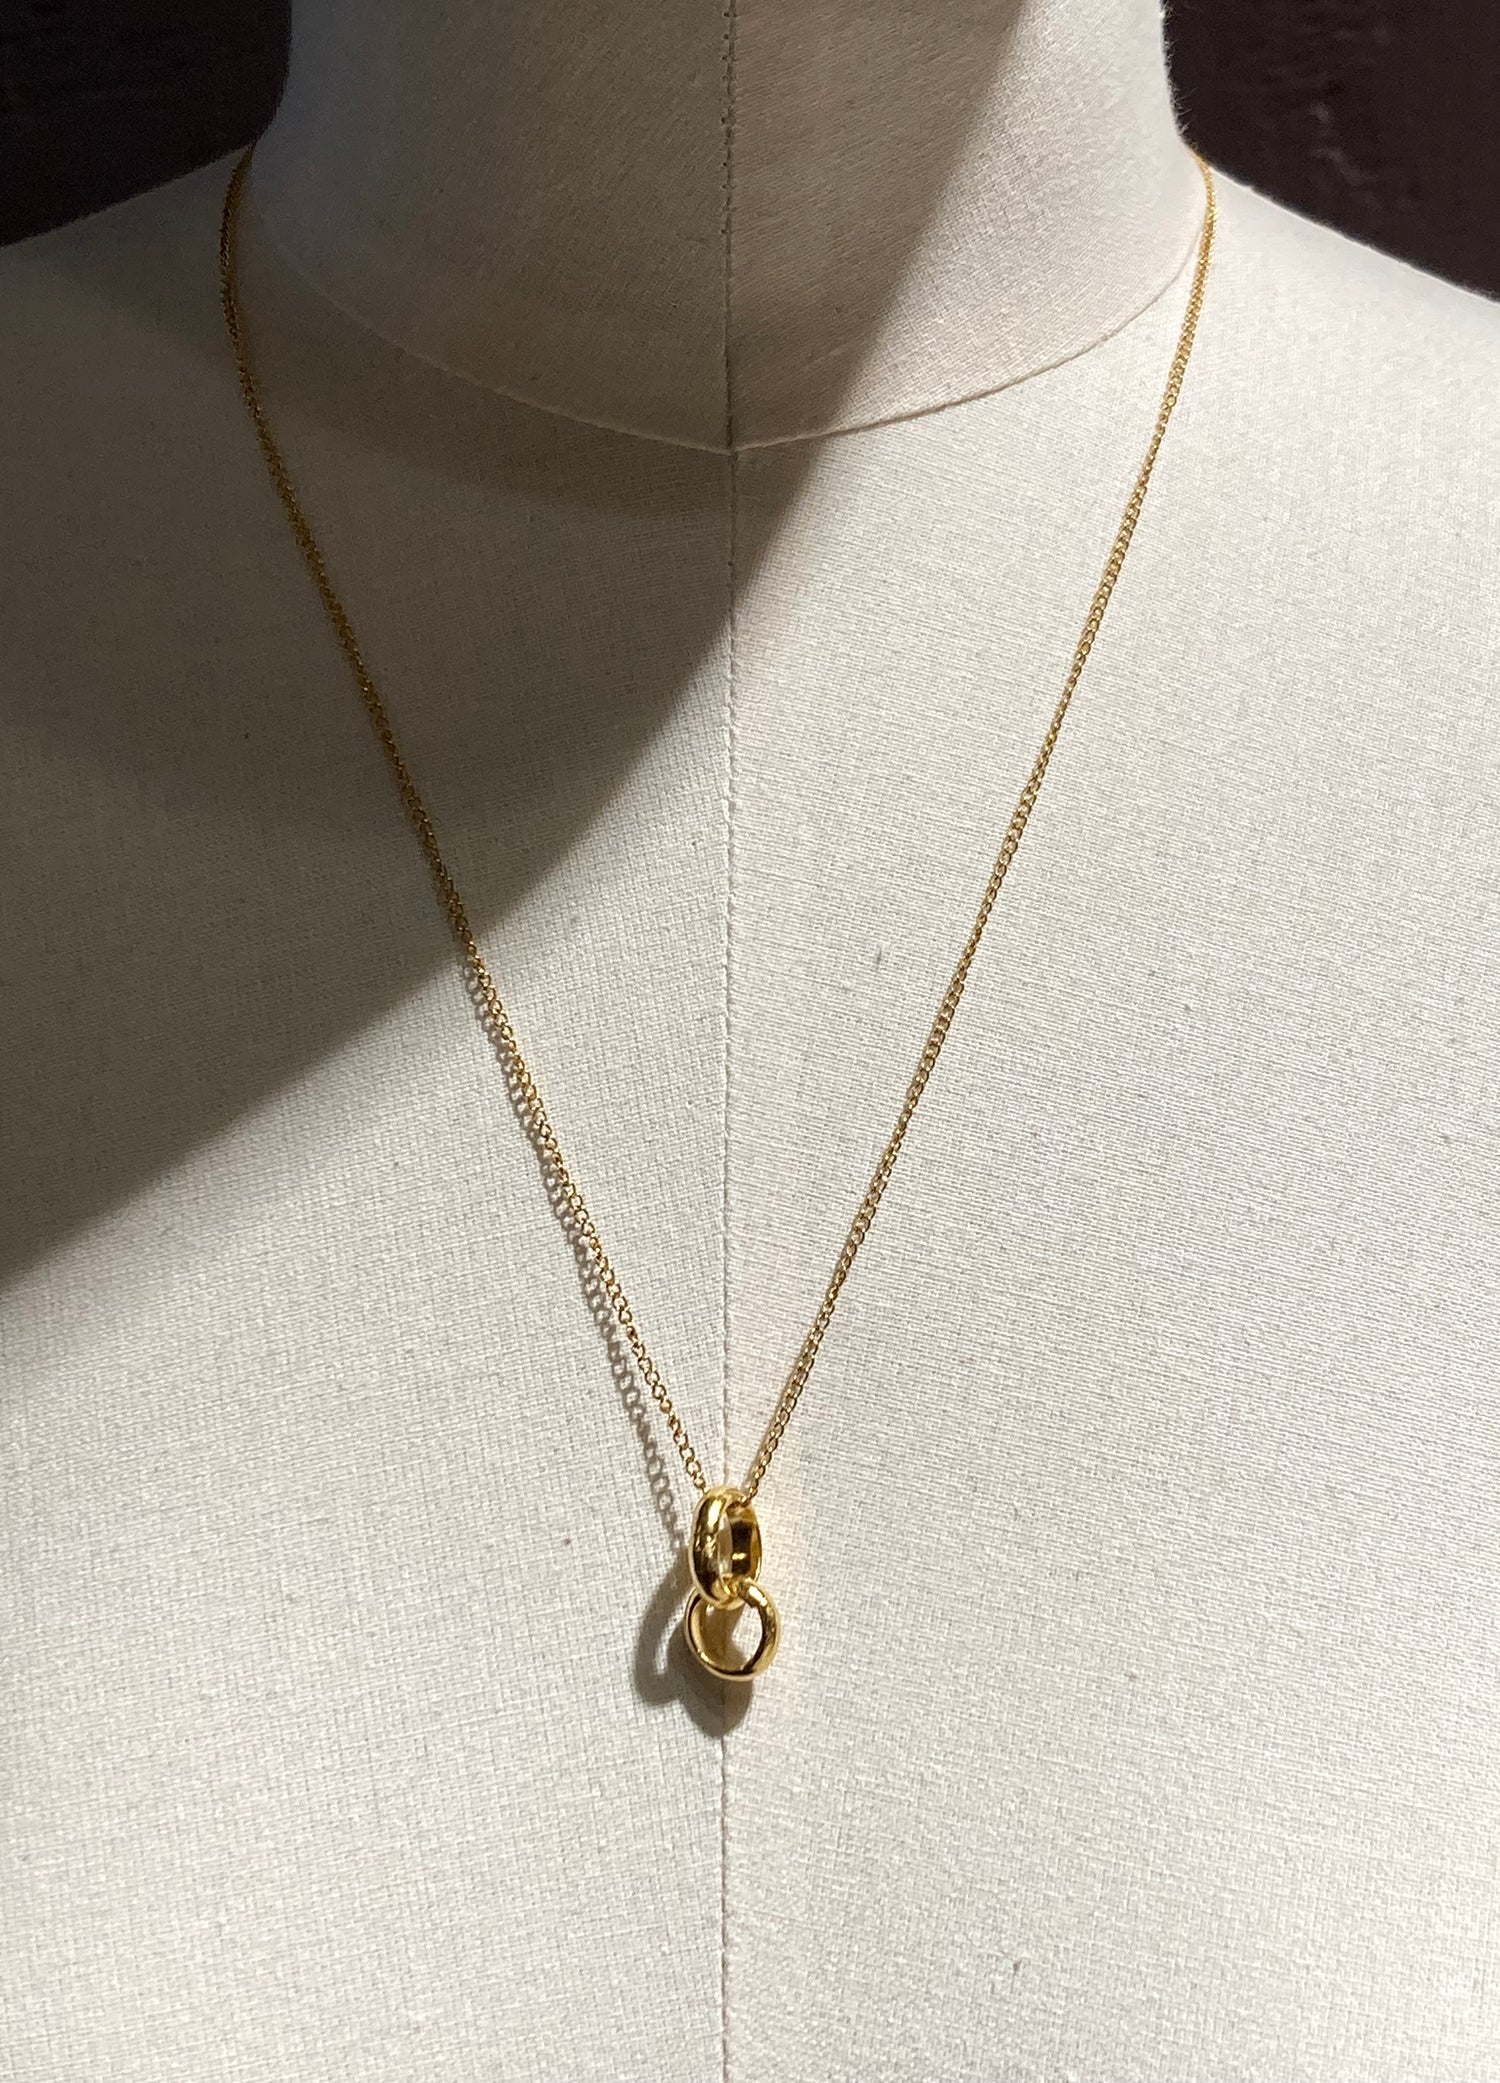 llayers-mens-women-jewelry-gold-pendant-Infinity-newyork-brooklyn-W2